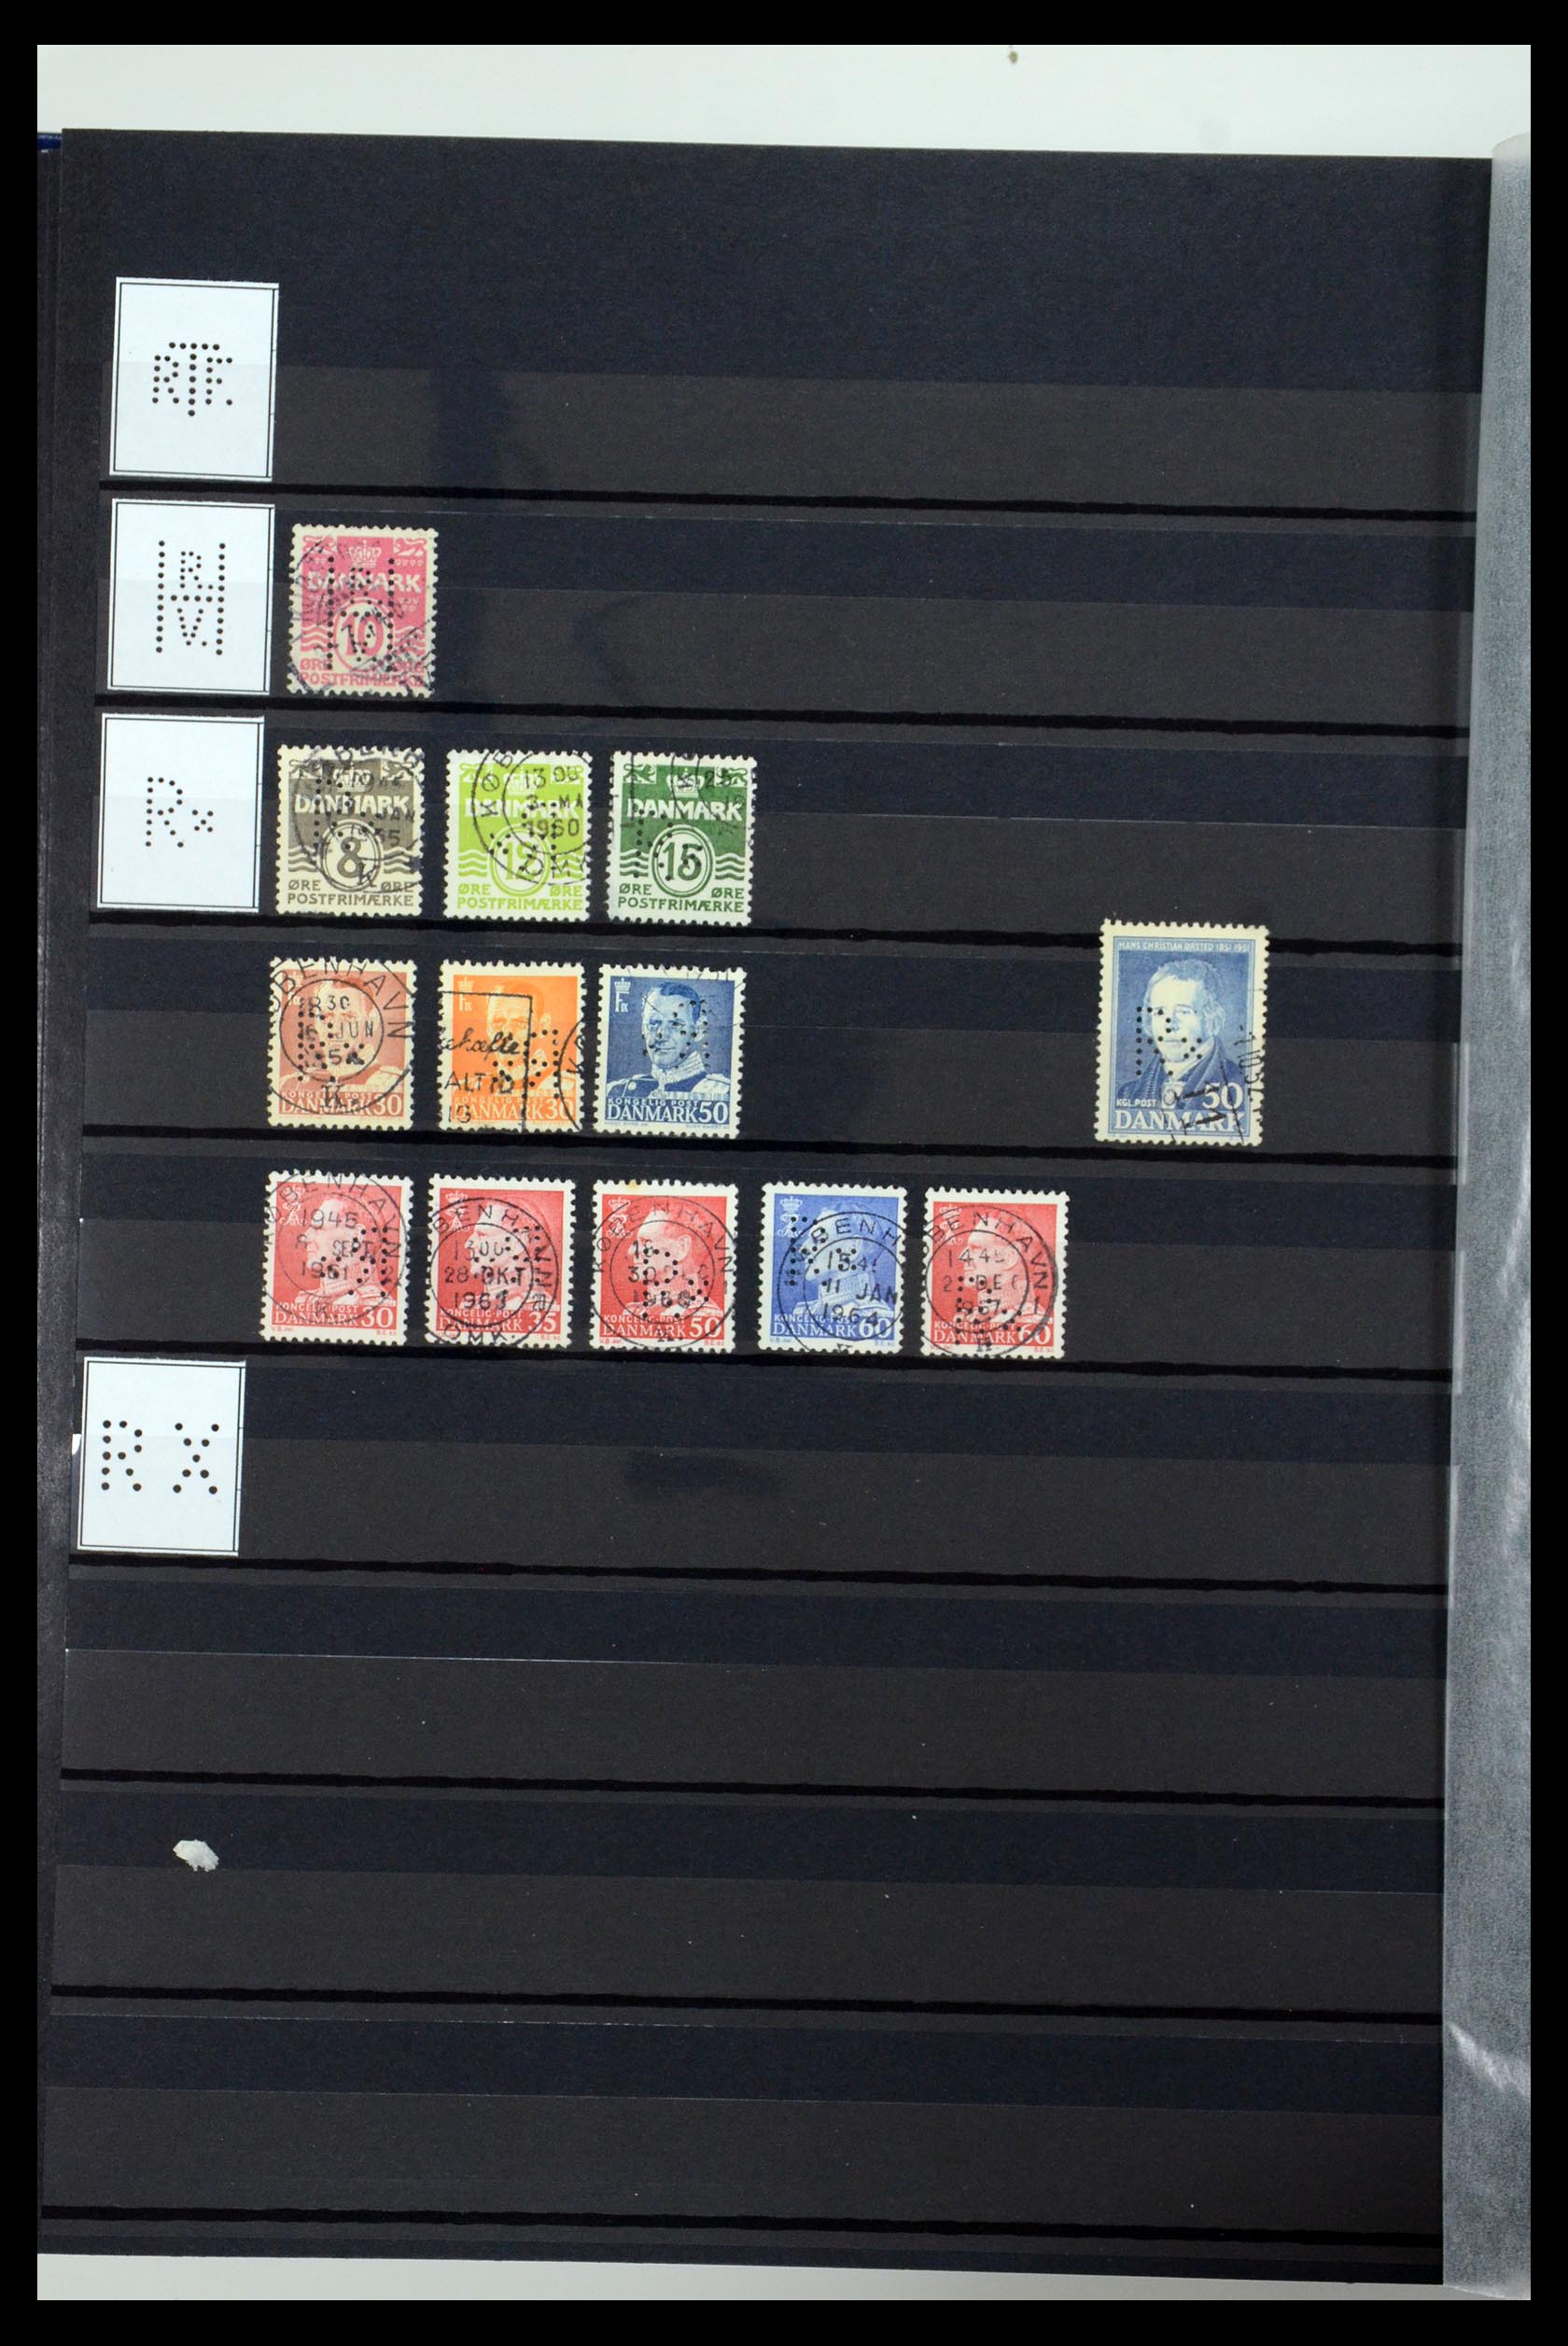 36396 202 - Stamp collection 36396 Denmark perfins.